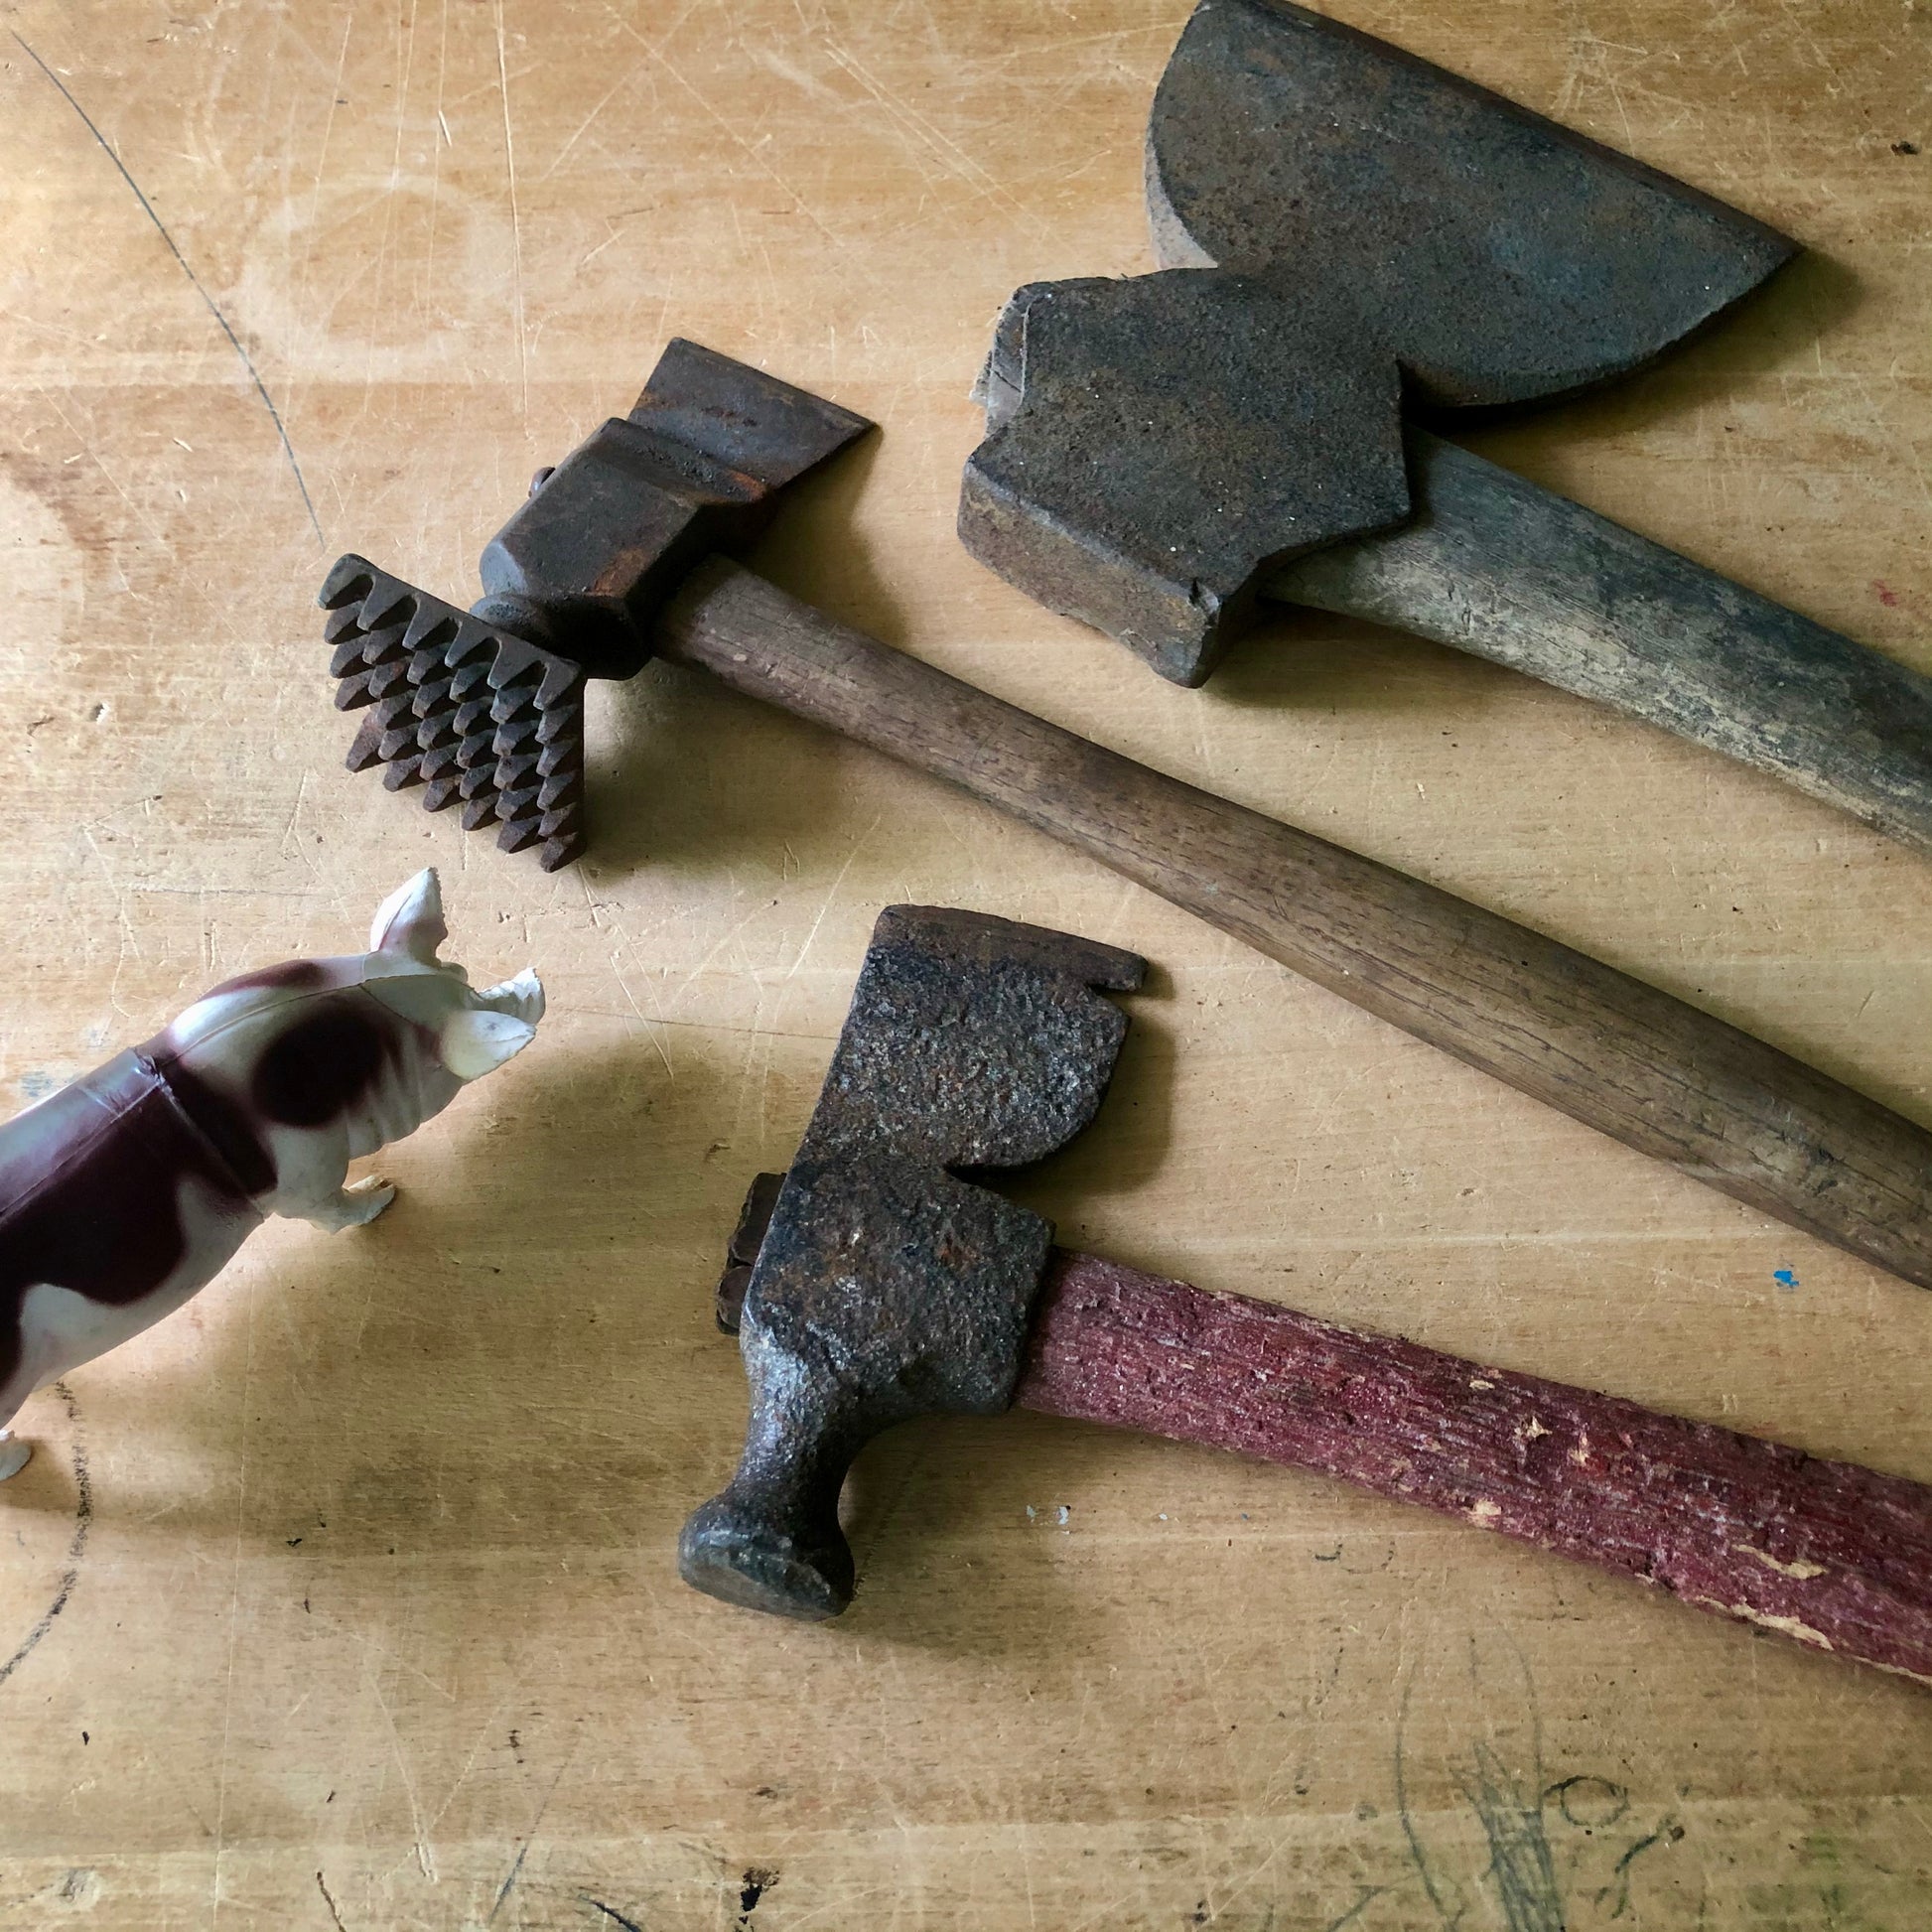 Primitive Antique Axe, Hammer and Hatchet Hand Tools (c.1900s)